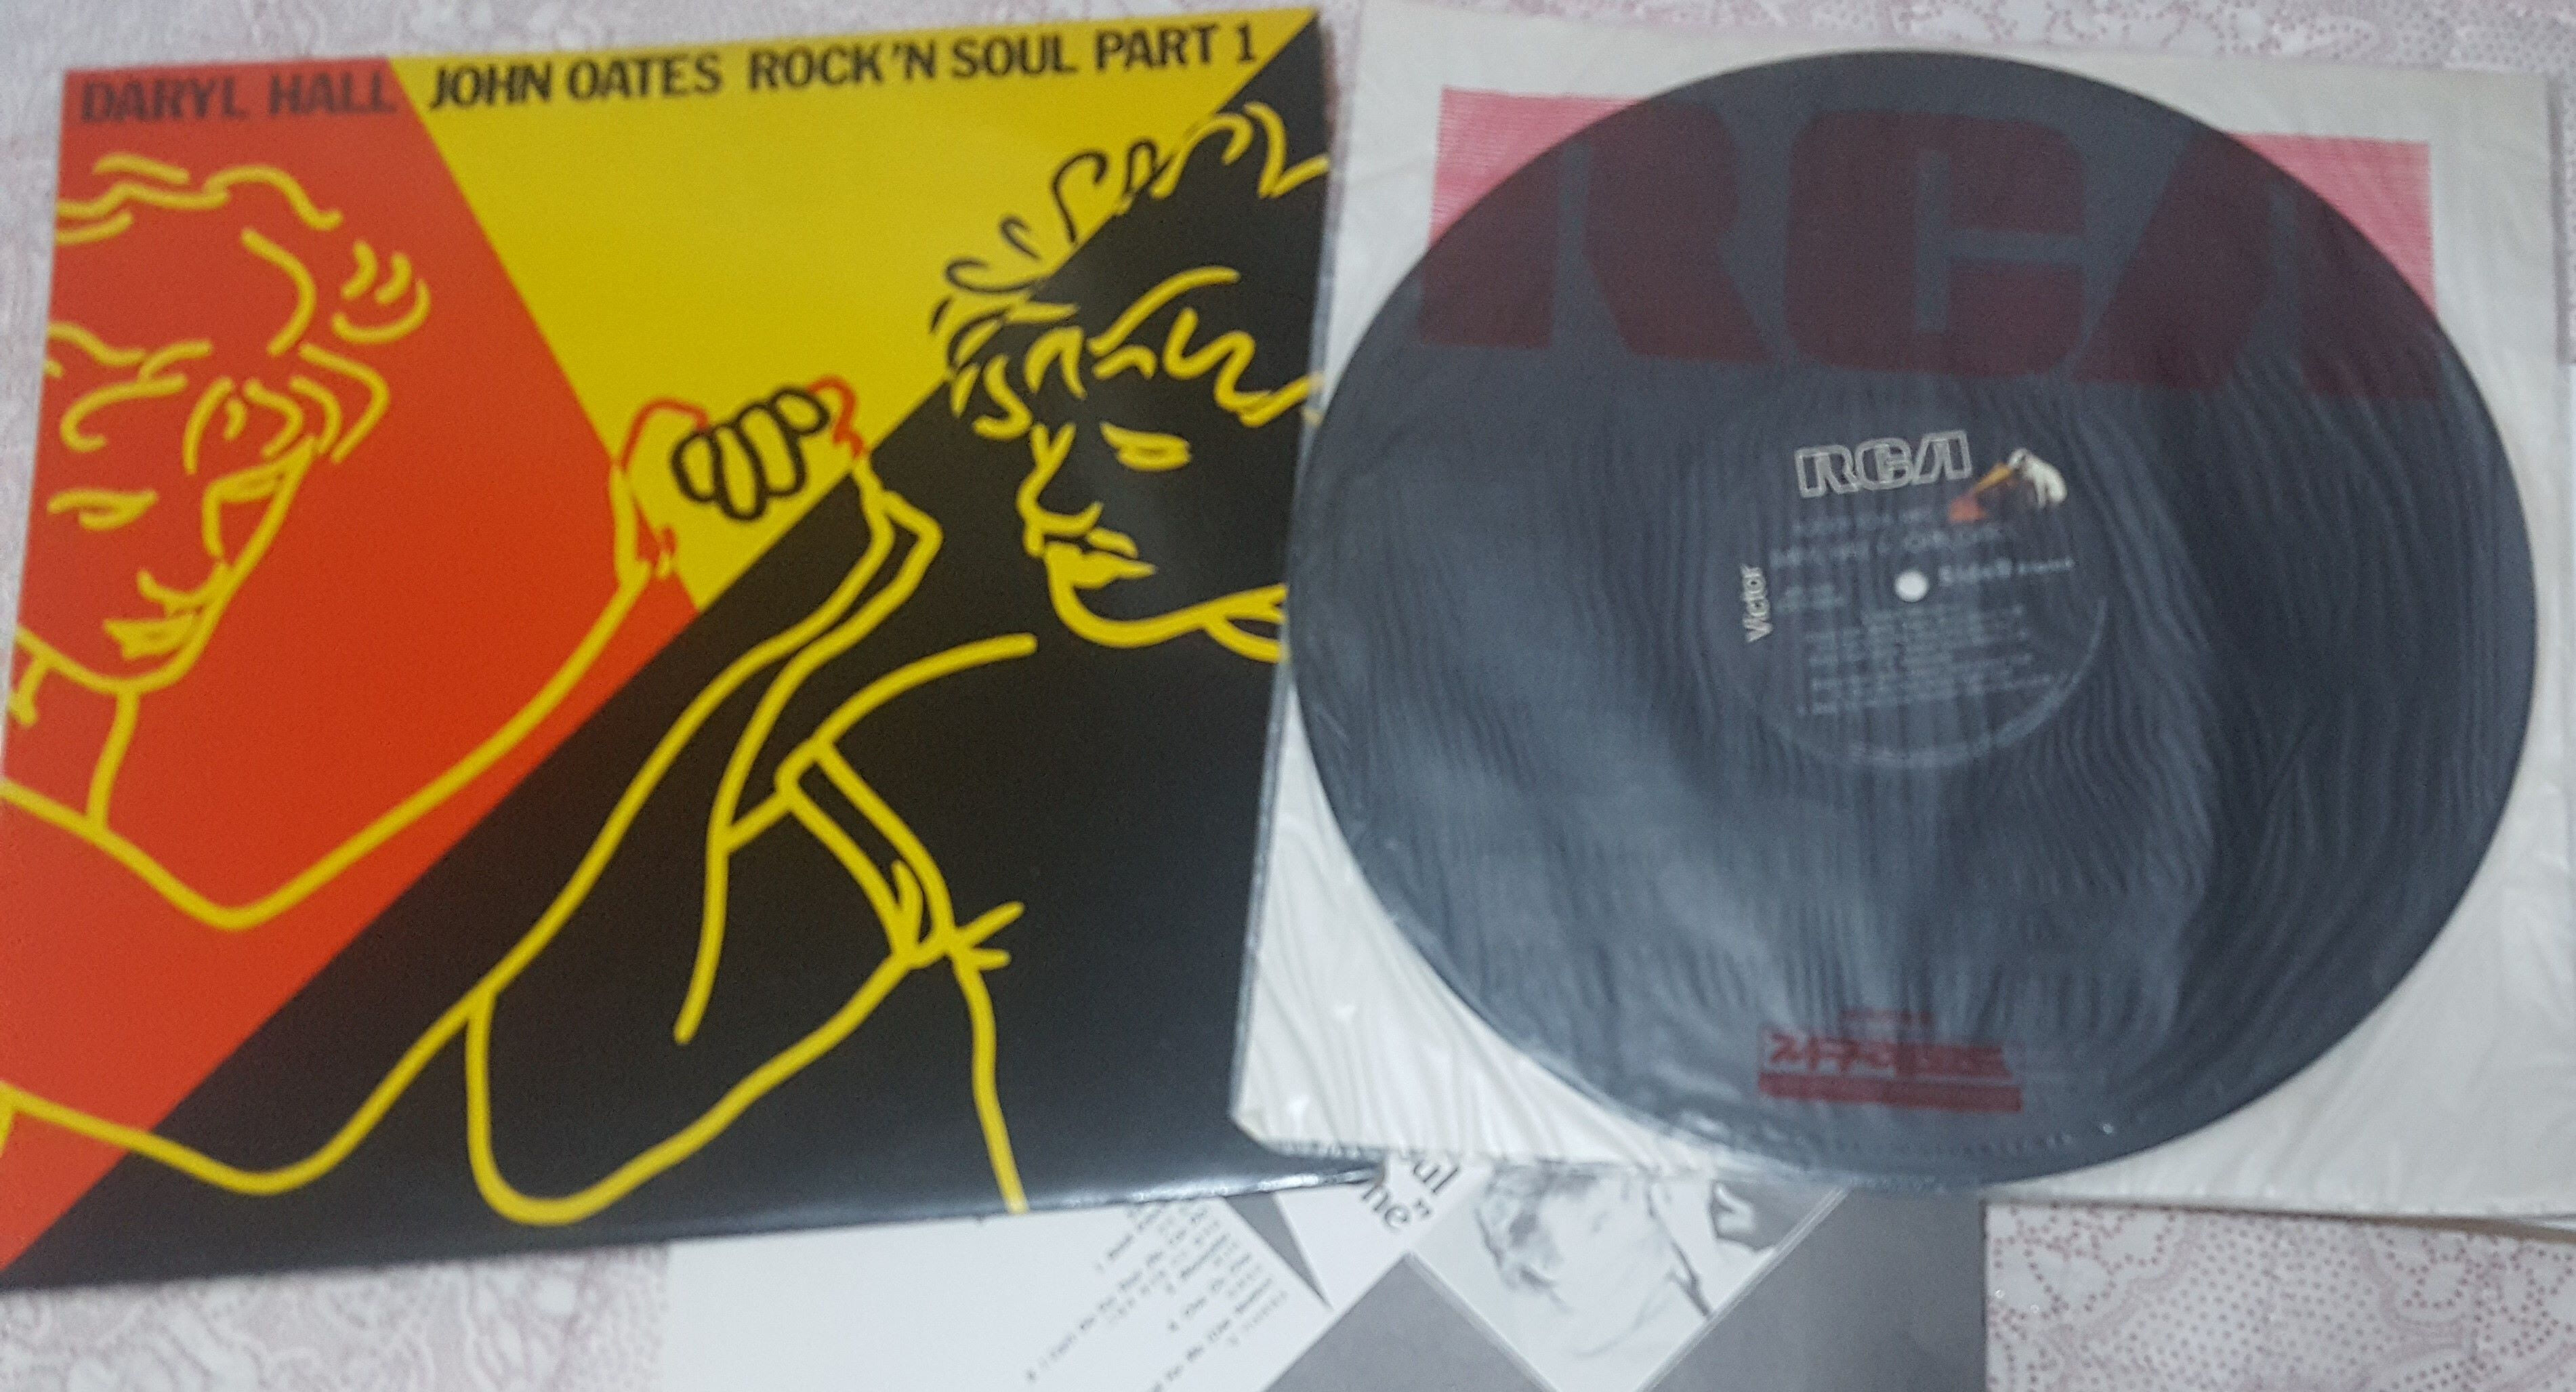 [LP] Daryl Hall & John Oates - Rock‘n Soul Part 1